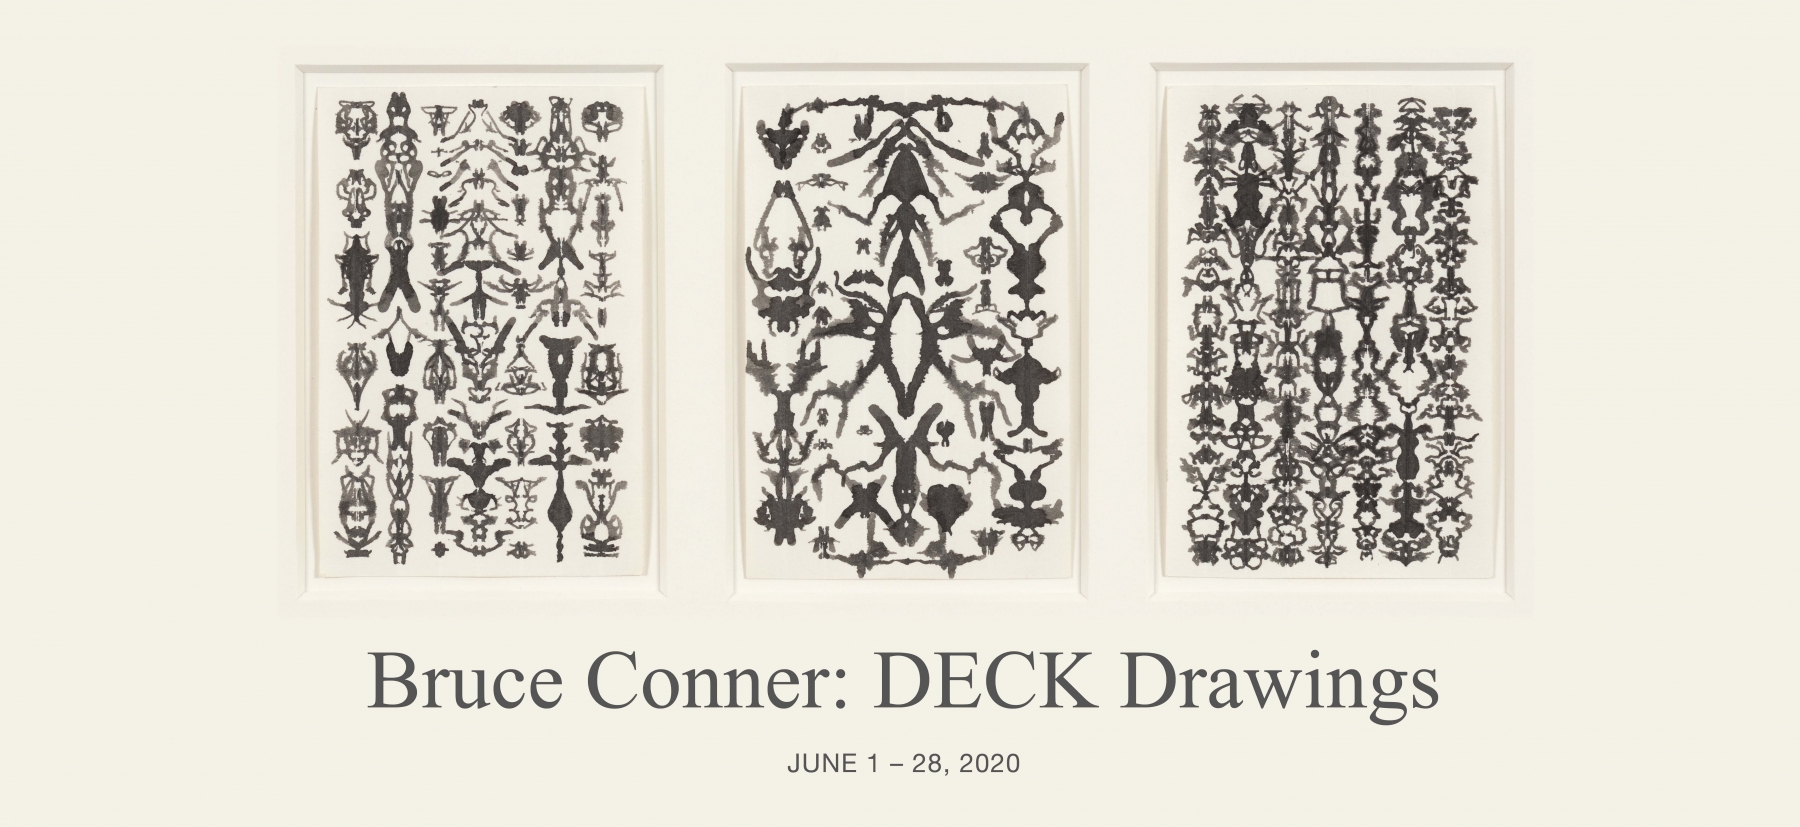 Bruce Conner TRIO 52-19-1, 1975 ink each card: 6 x 4 in. (15.2 x 10.2 cm) frame: 13 1/4 x 21 1/4 in. (33.7 x 54 cm)